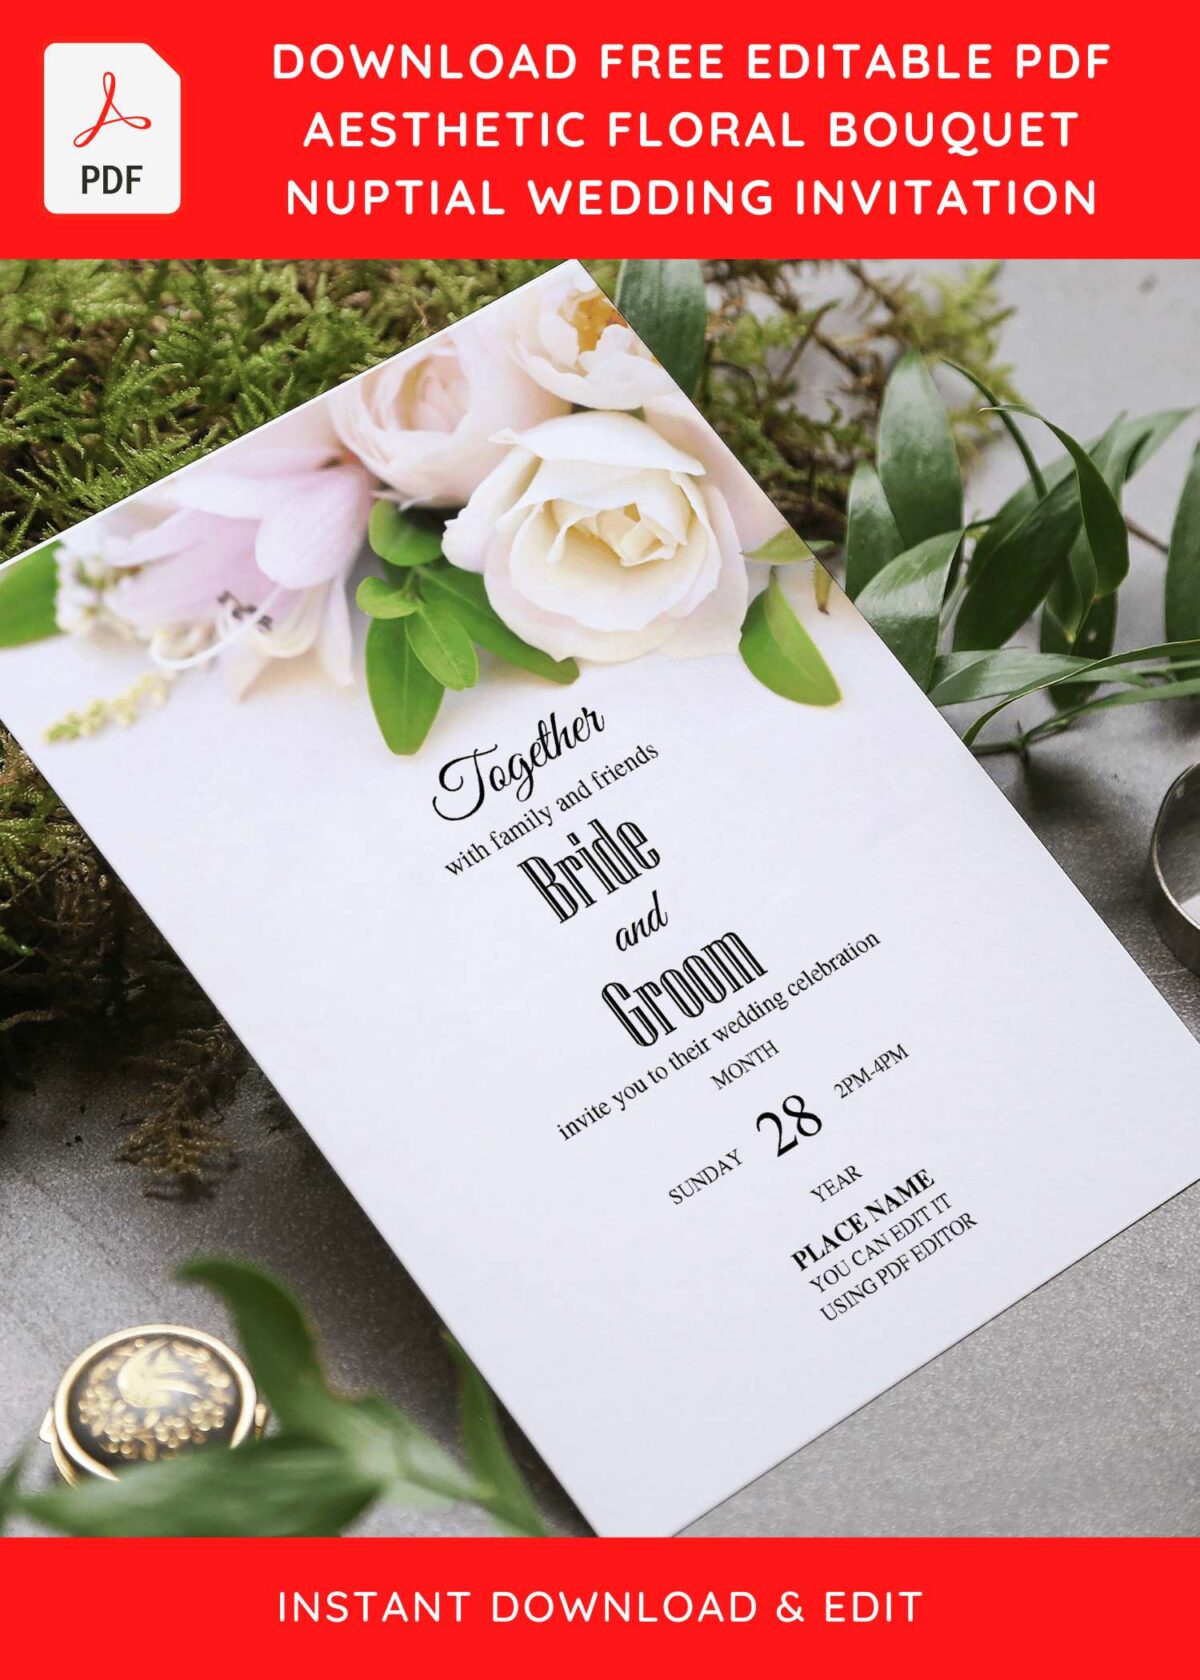 (Free Editable PDF) Pristine White Rose Wedding Invitation Templates with realistic Rose